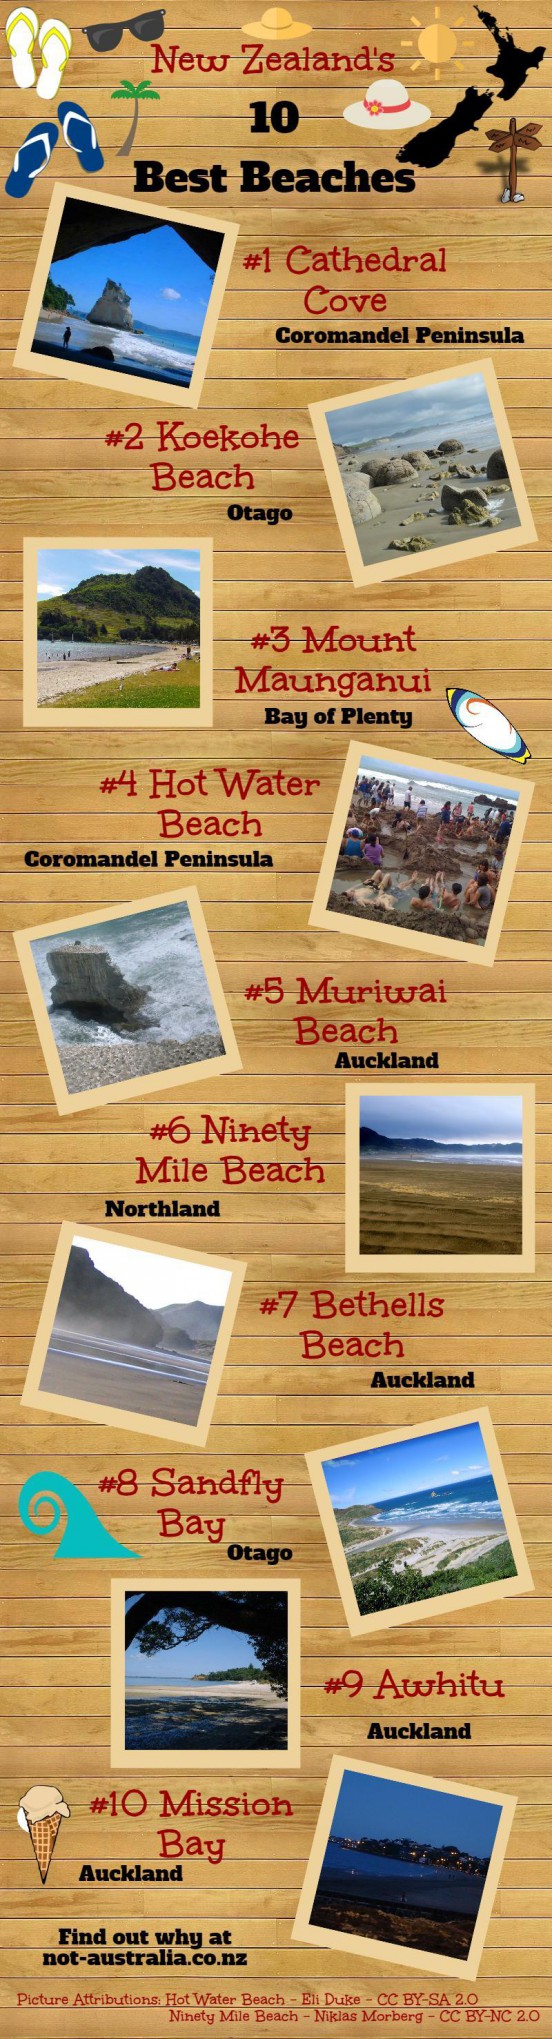 New Zealand’s 10 Best Beaches - Not Australia